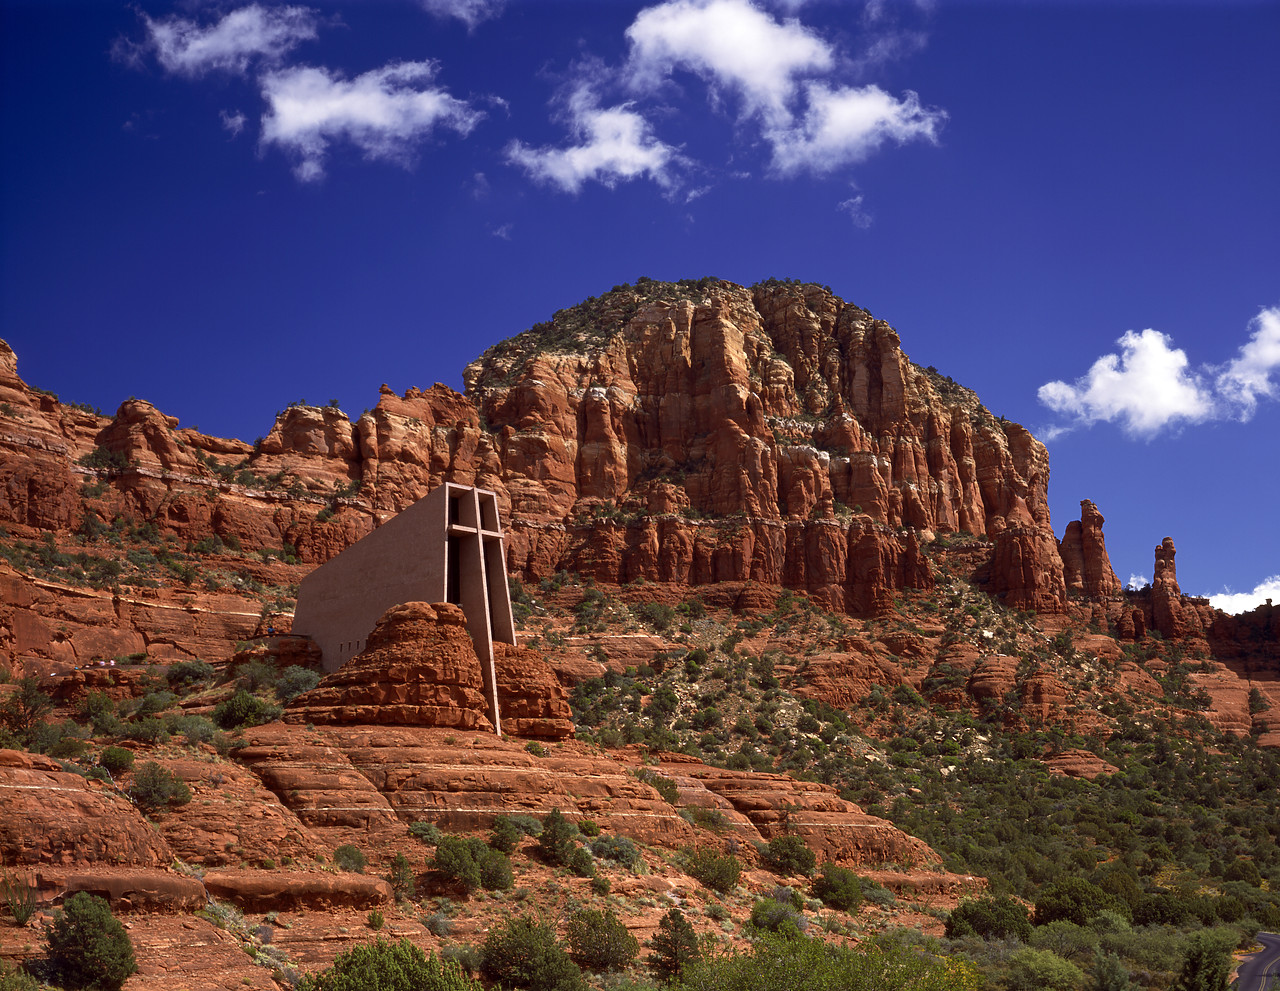 #955836-2 - Cathedral of the Rocks, Sedona, Arizona, USA